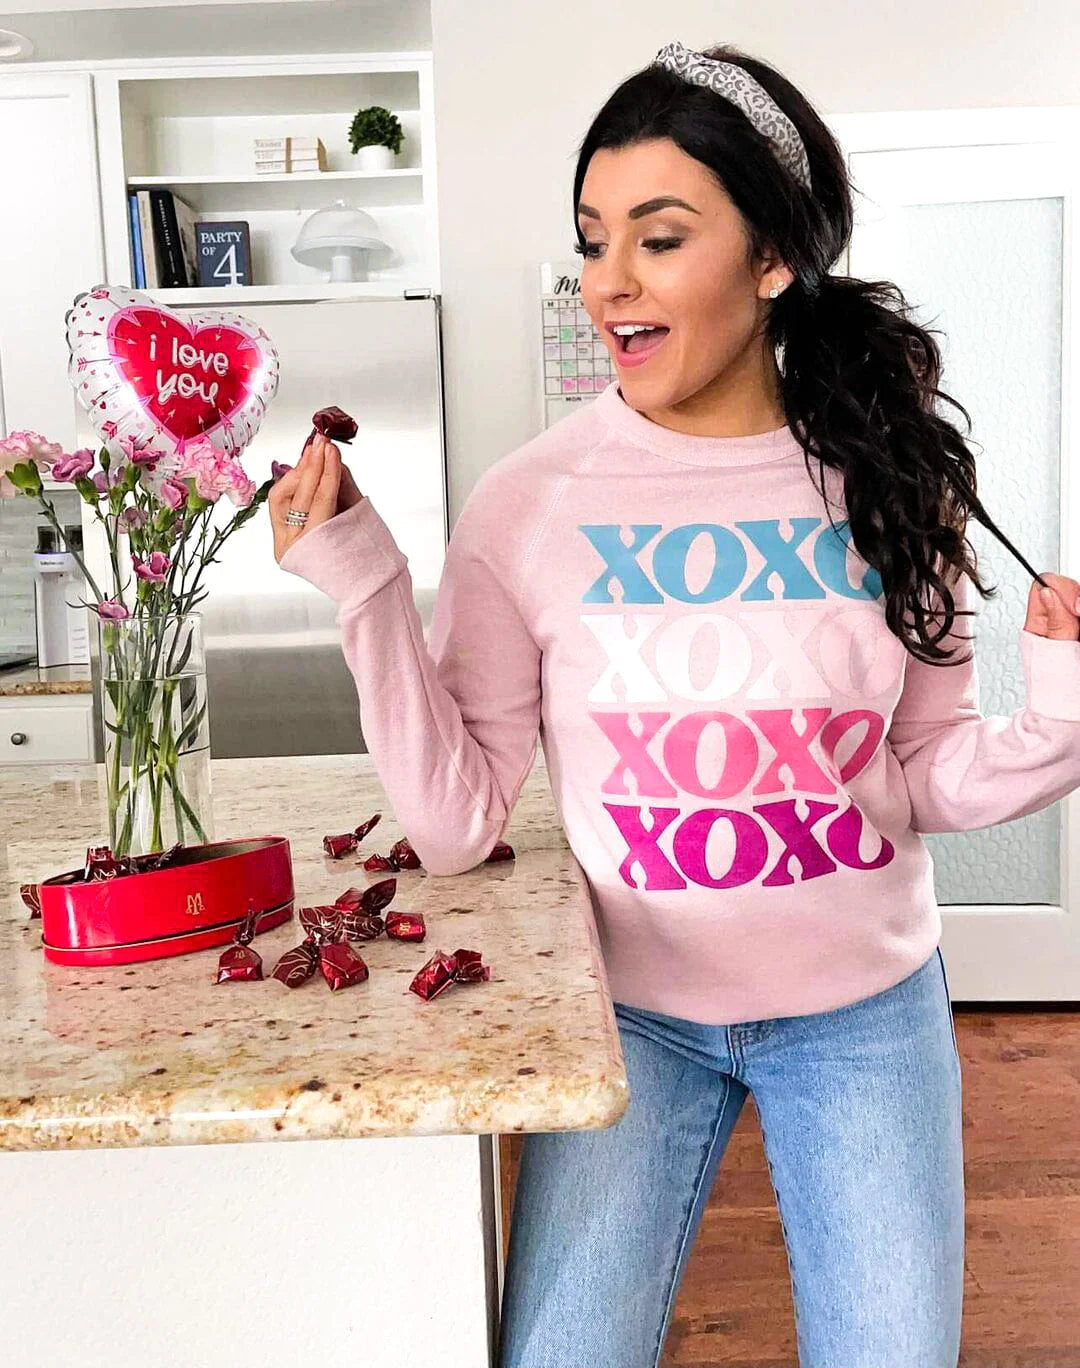 A woman wearing a pink sweatshirt that repeats XOXO